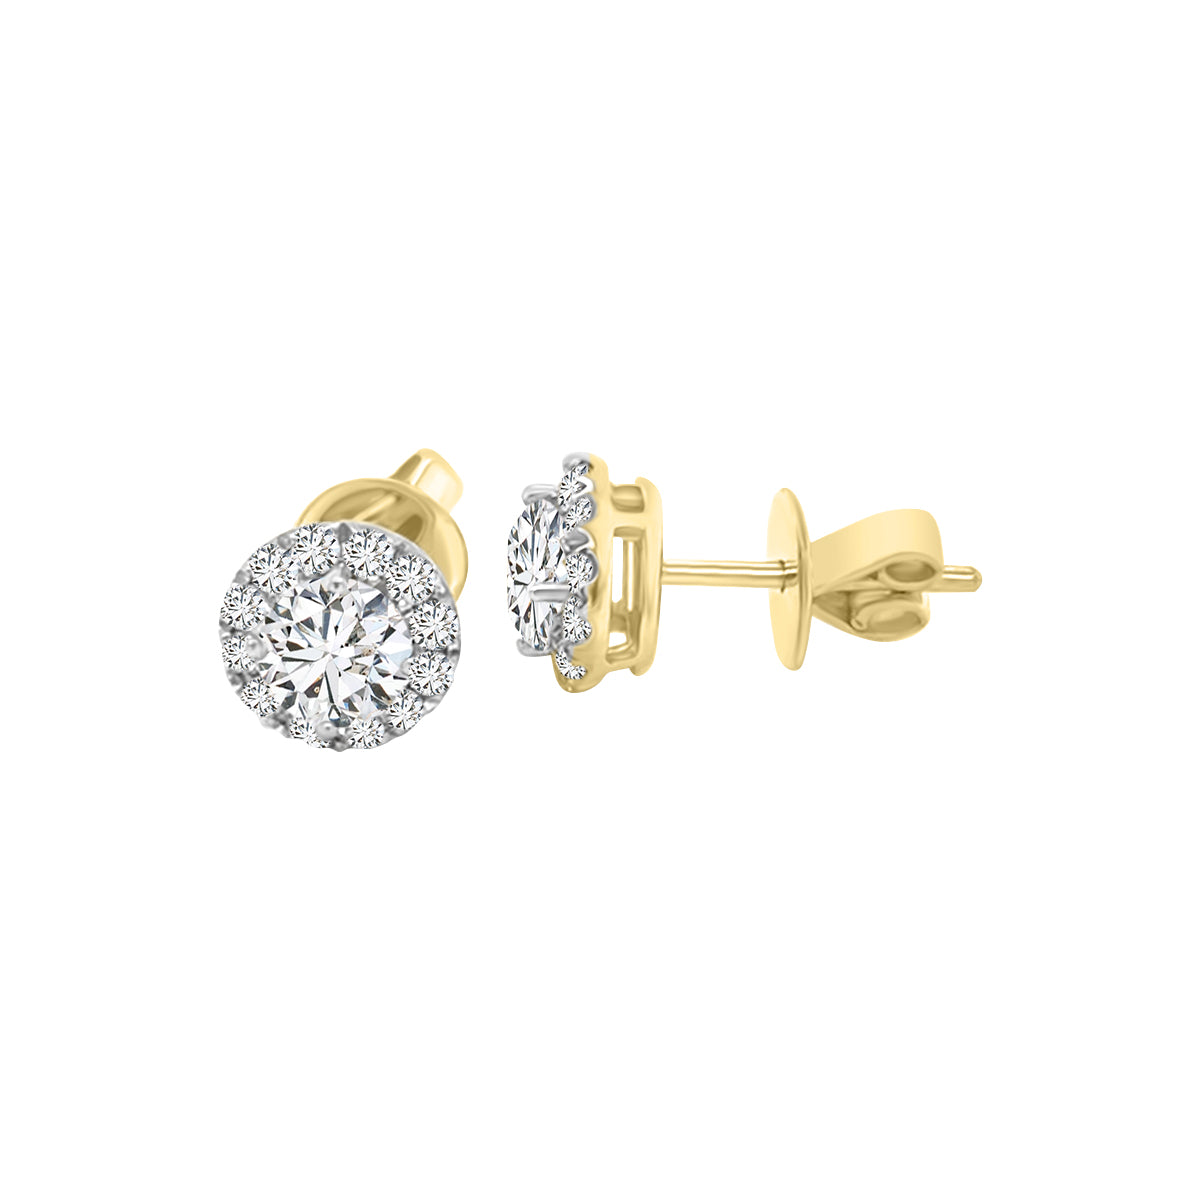 Halo Diamond Stud Earrings In 18k Yellow Gold.